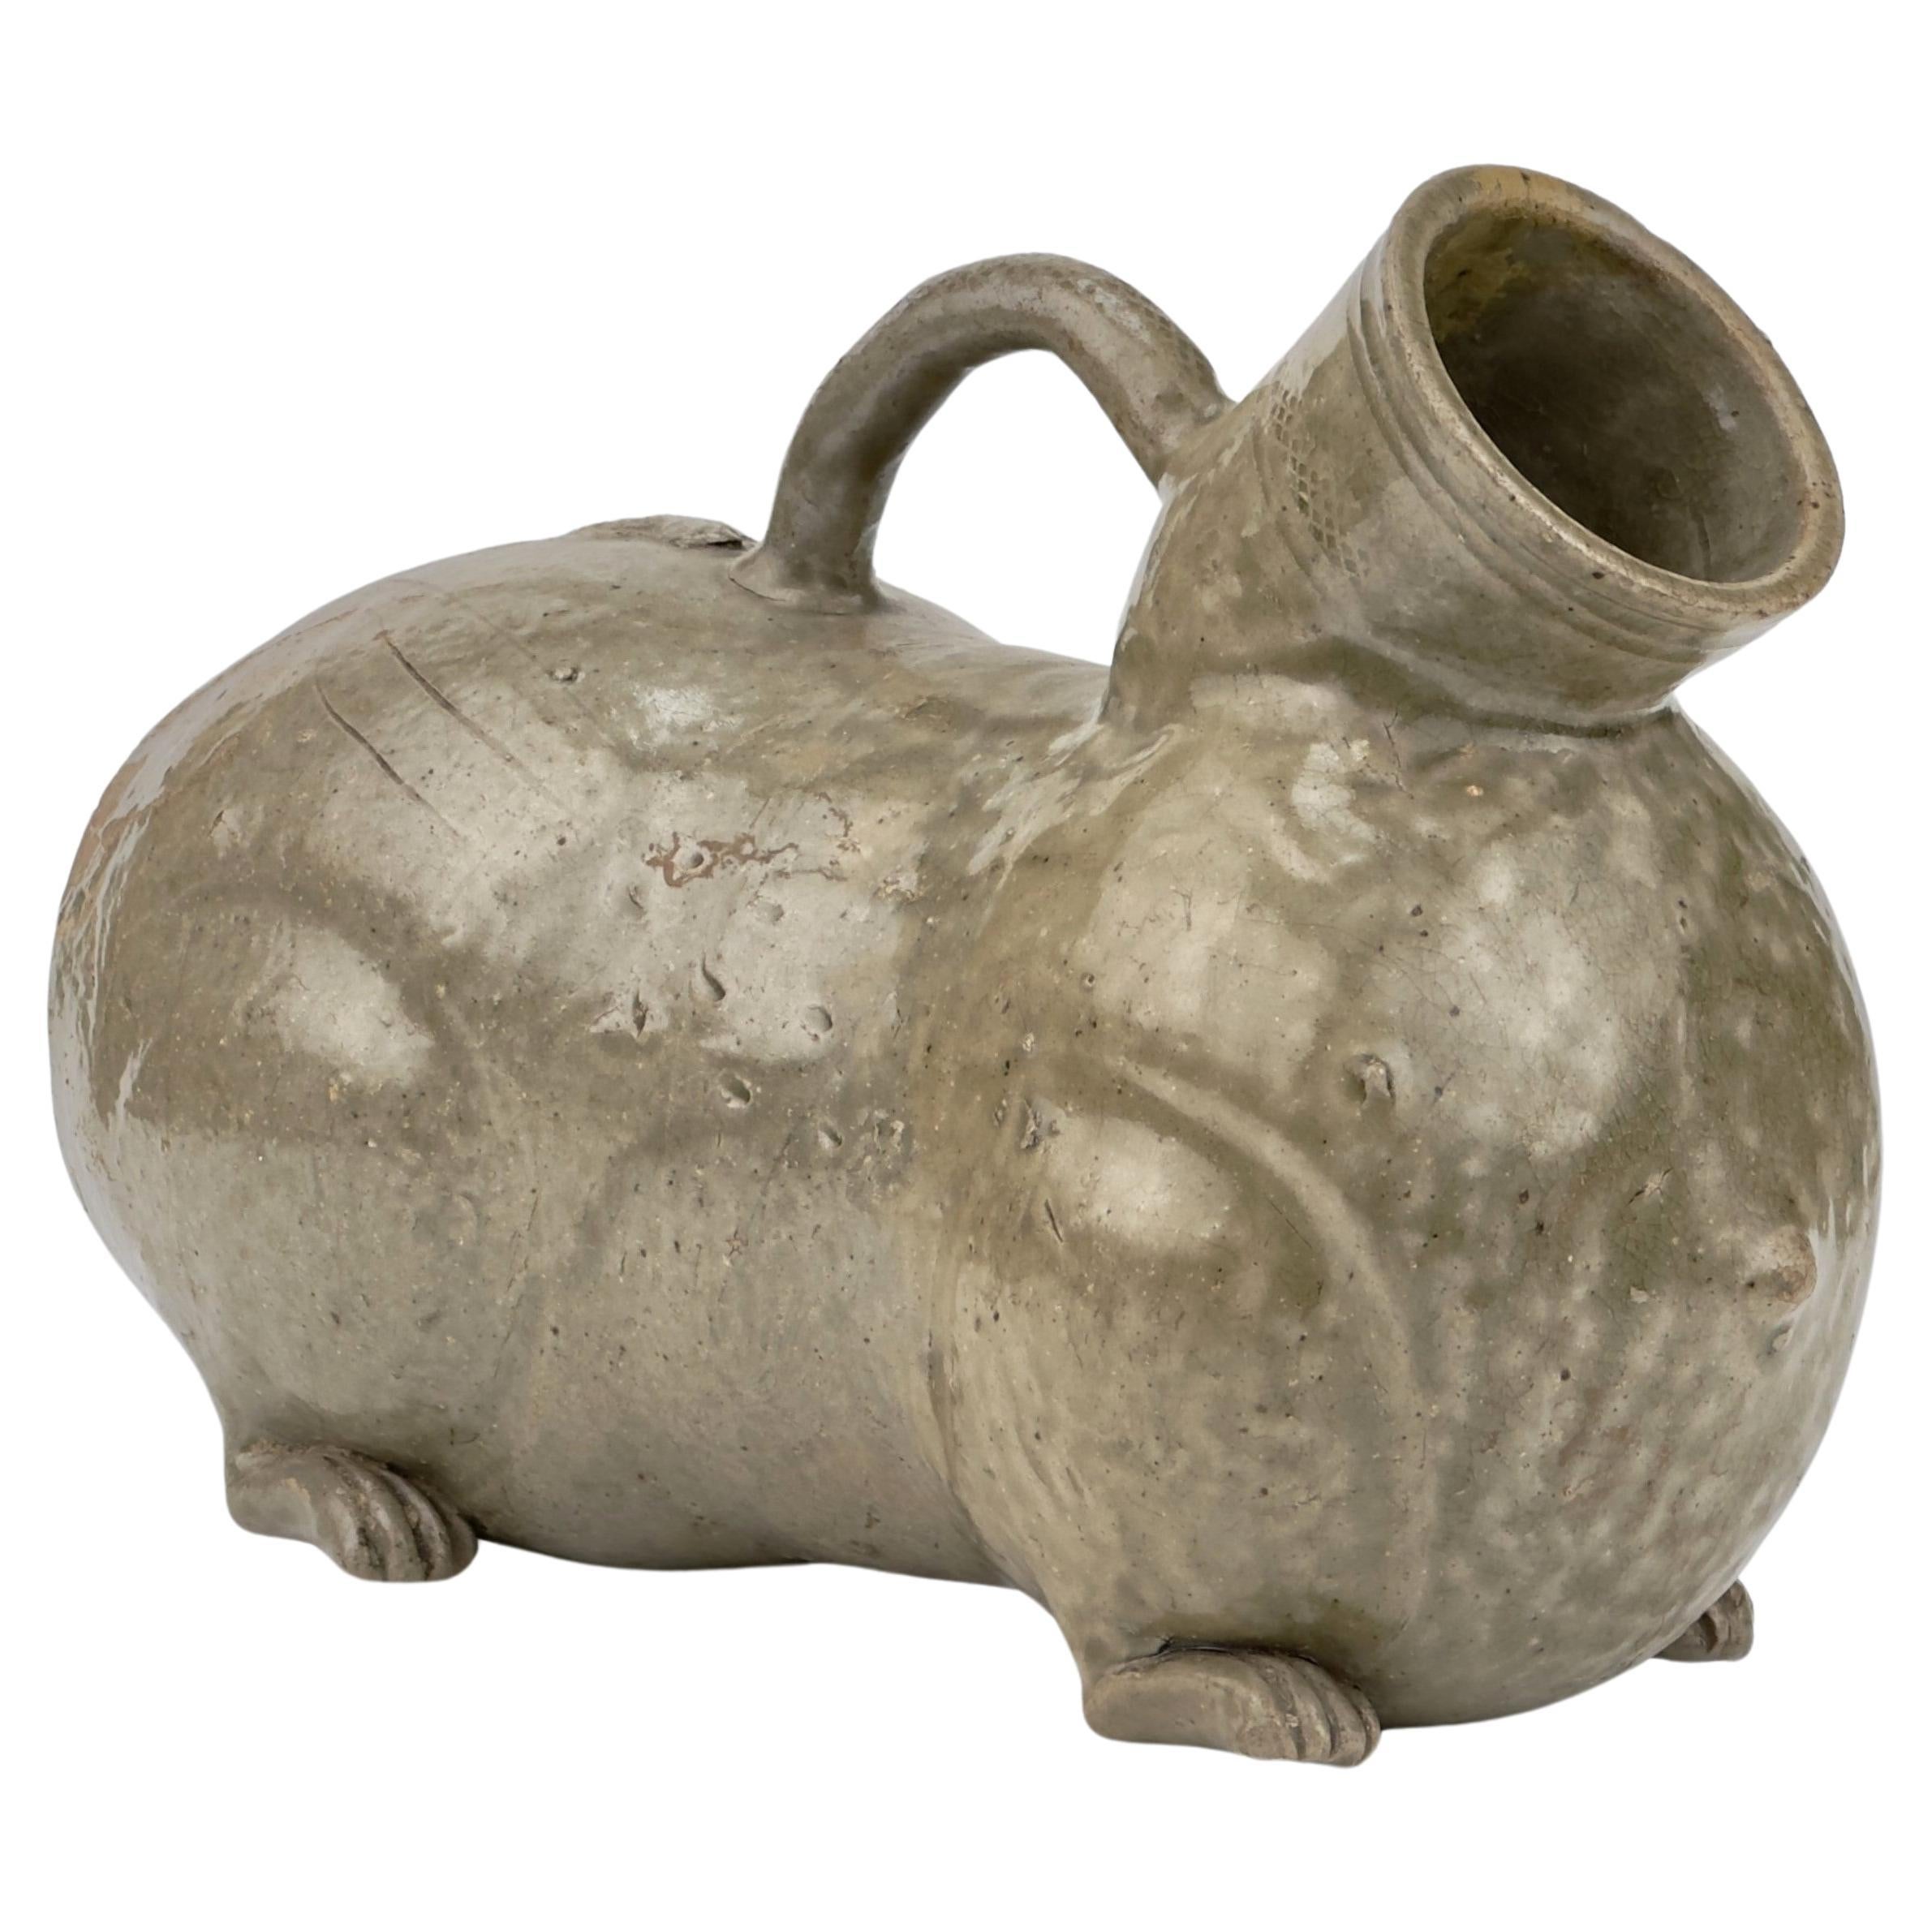 Rare Yue Celadon-Glazed Figural Vessel, Western Jin dynasty (265-420)